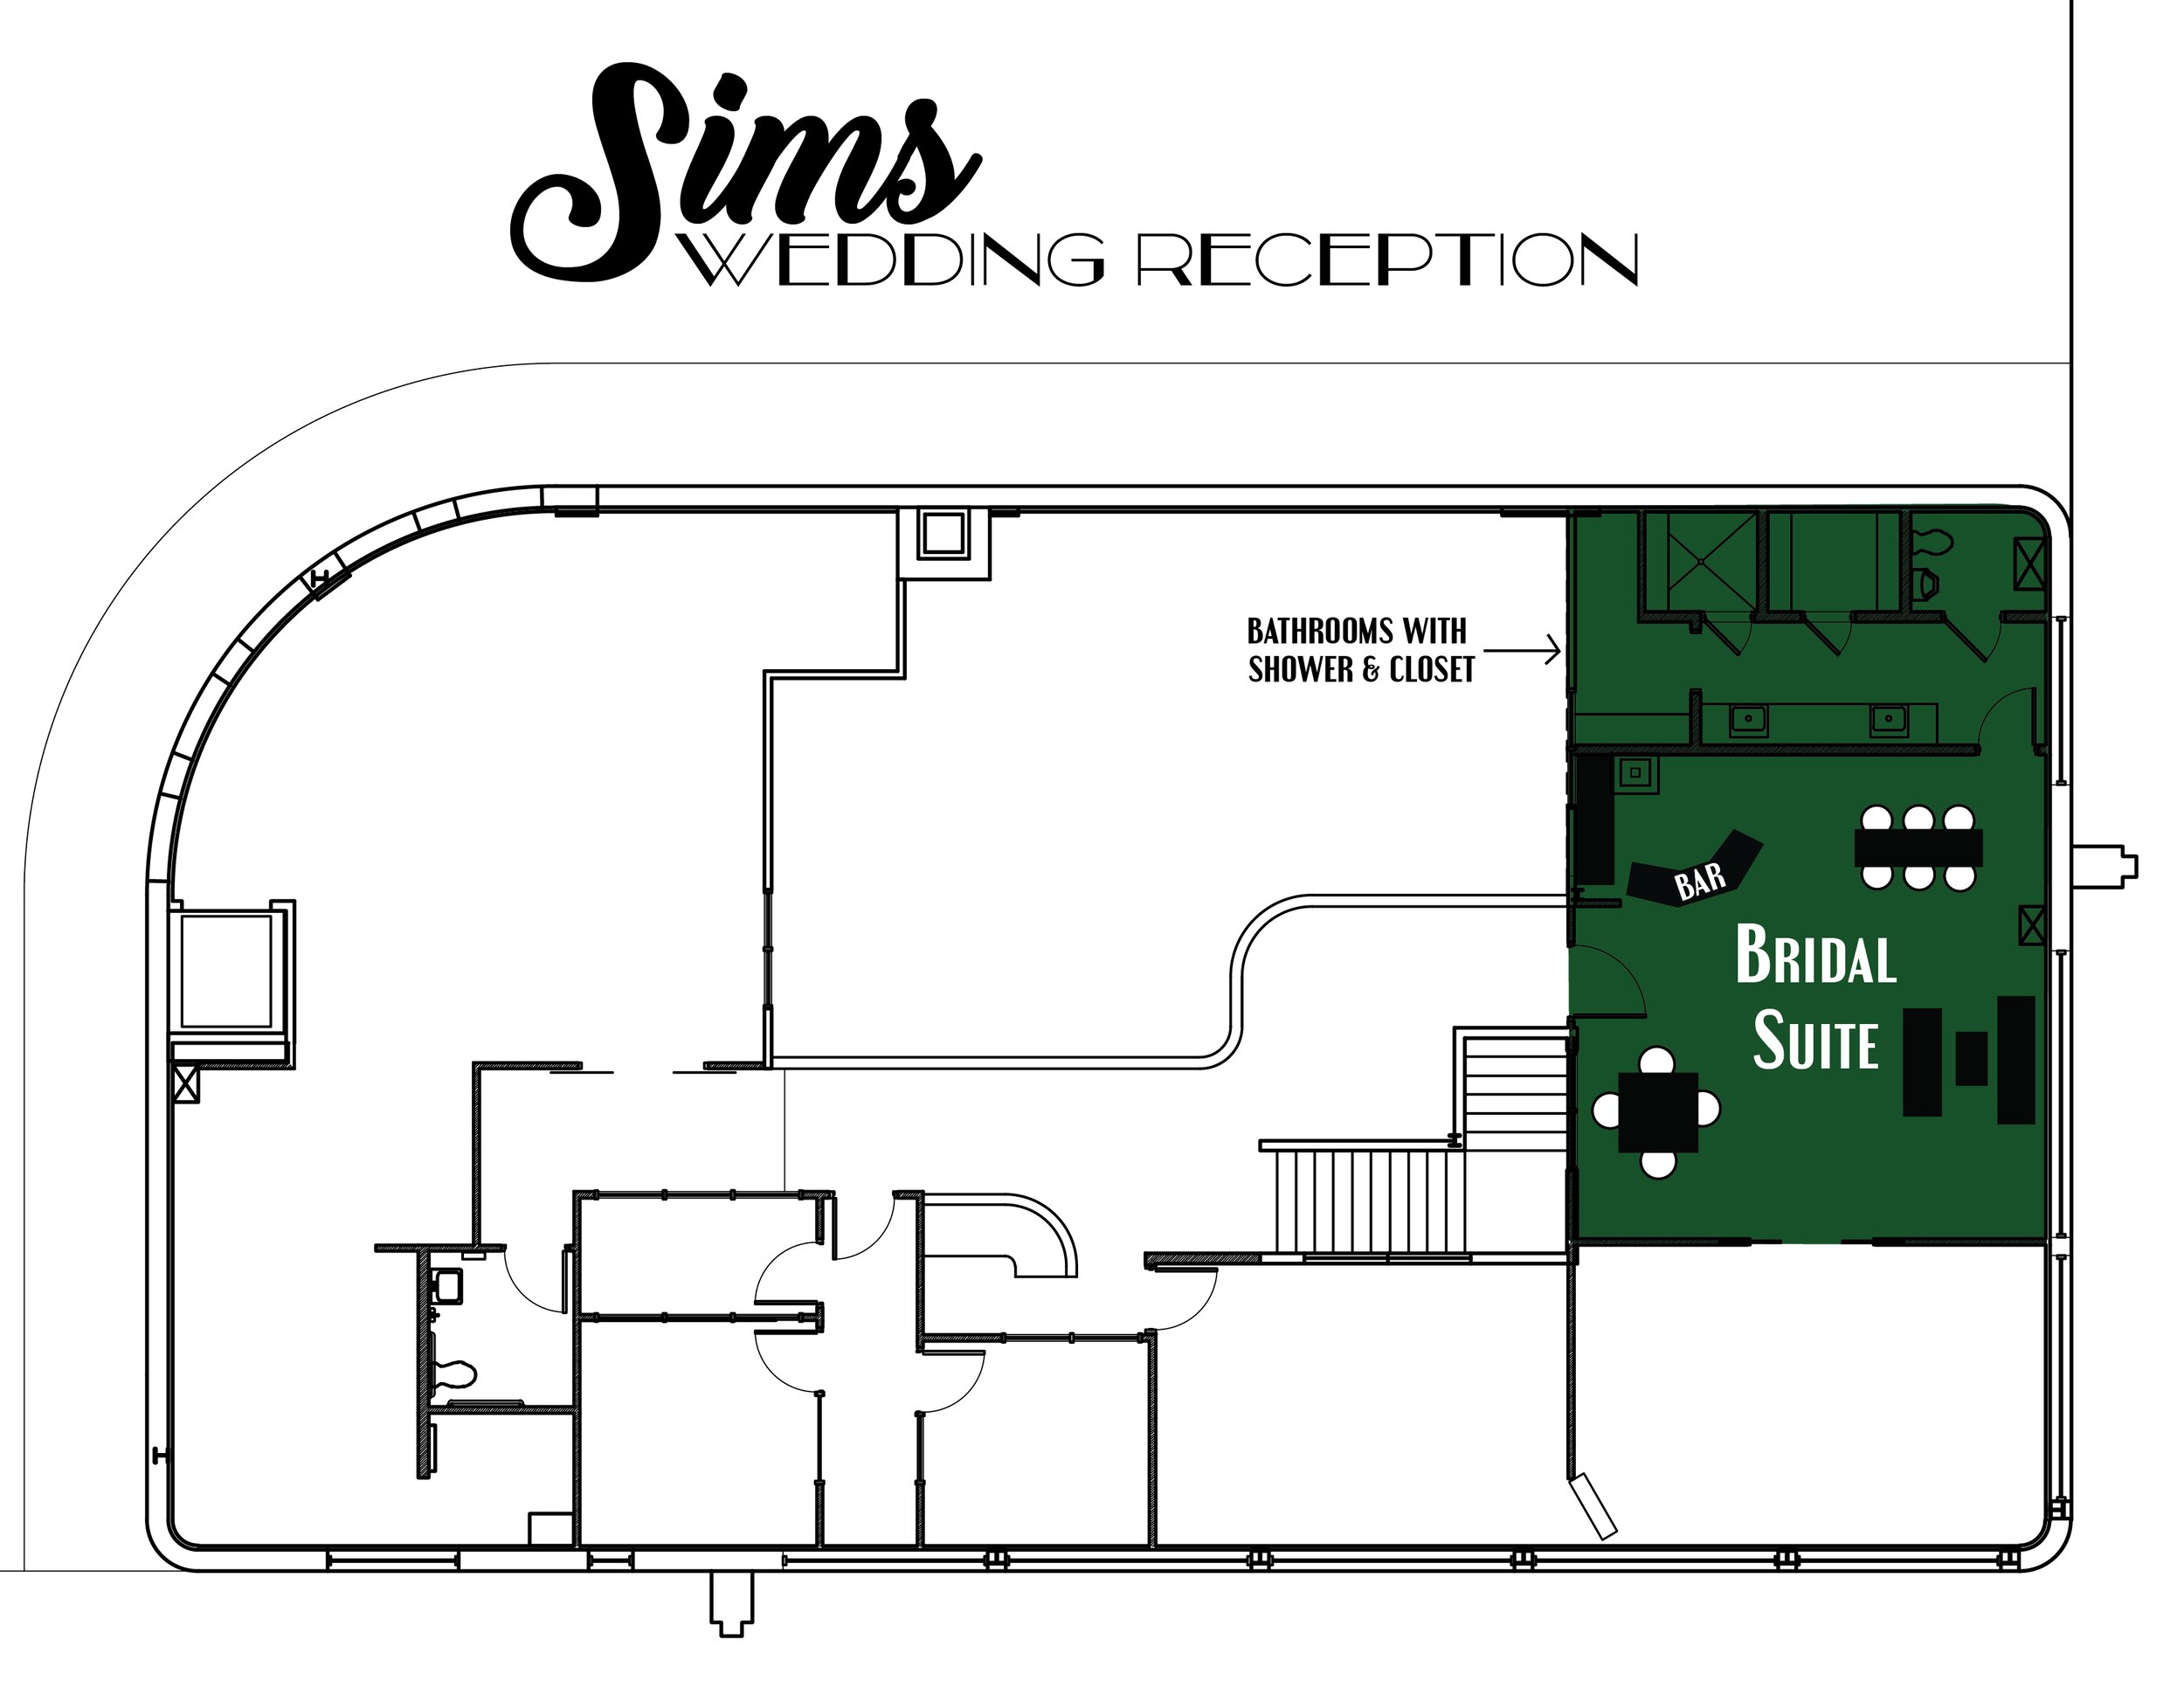 Sims Bridal suite floor planArtboard 1.jpg